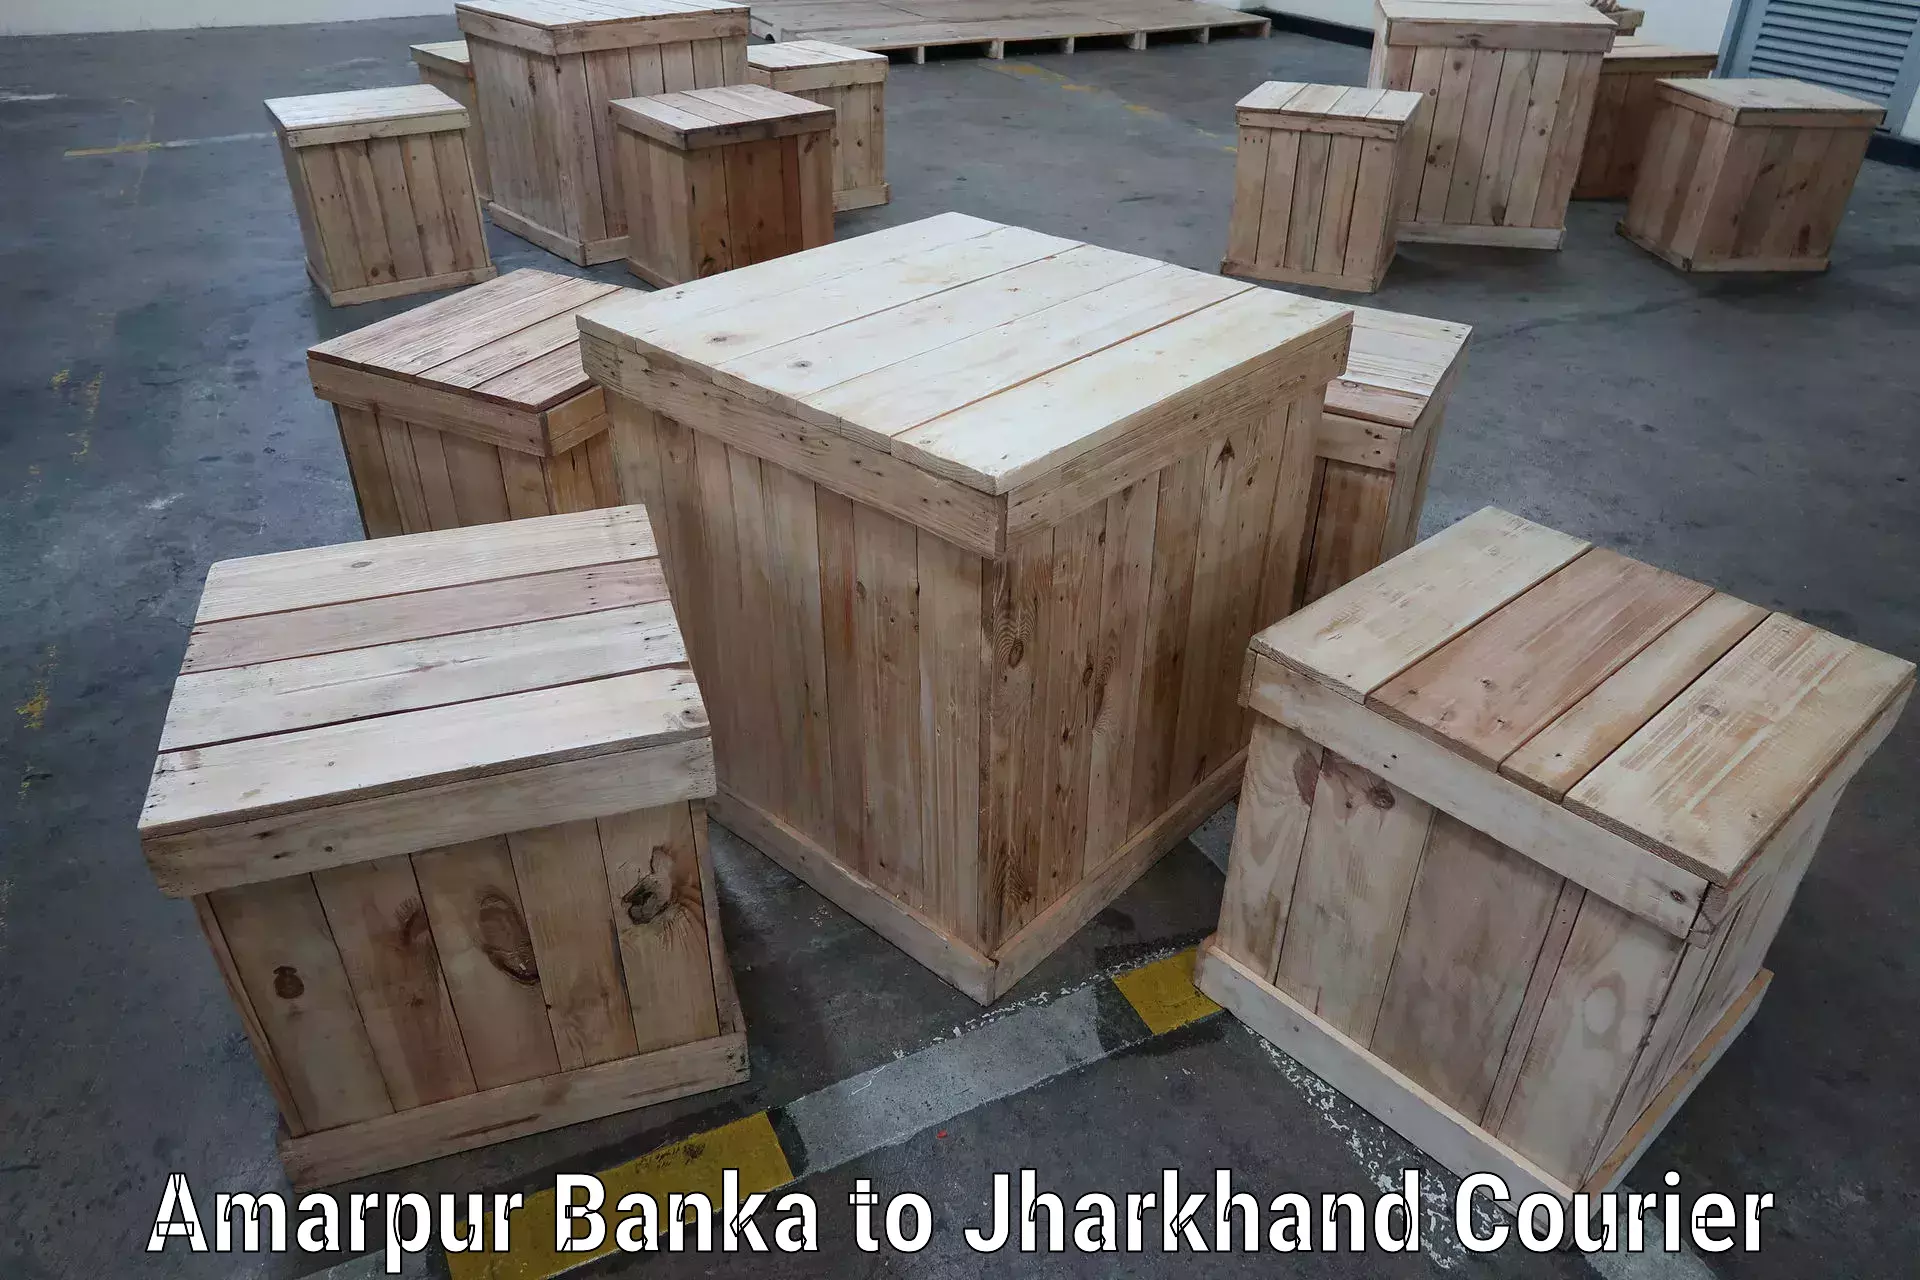 Professional courier handling Amarpur Banka to Phusro